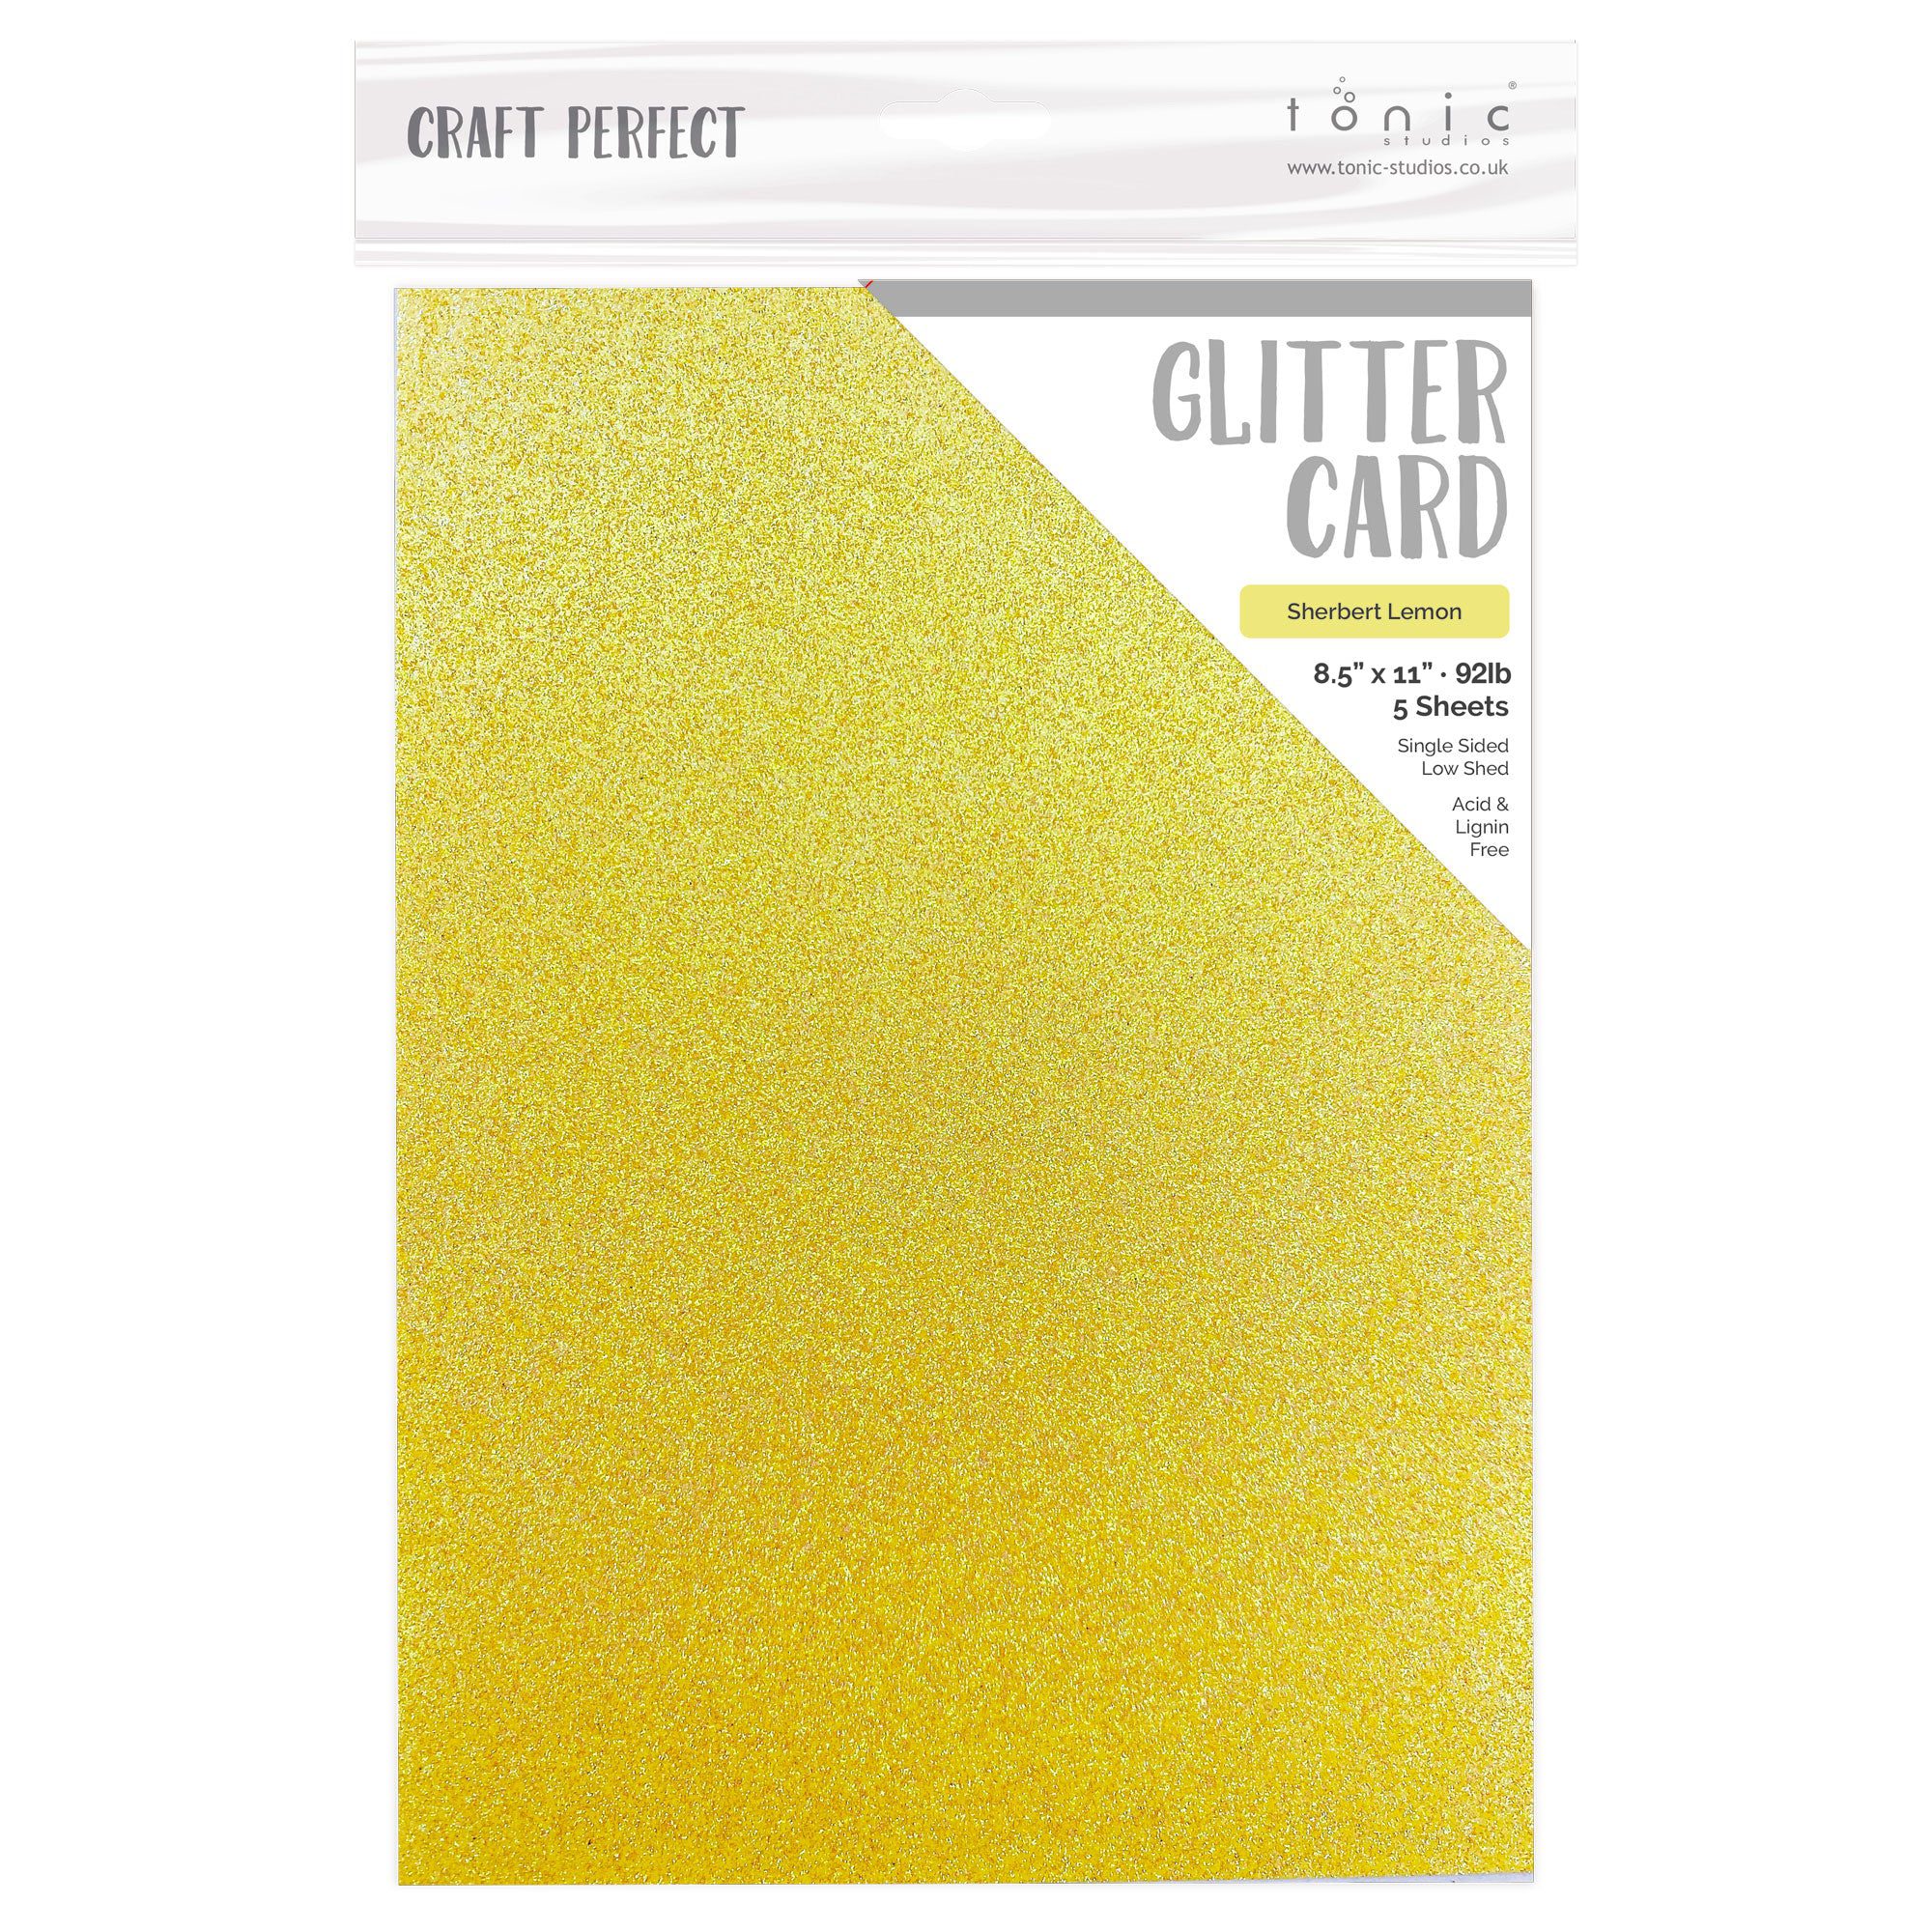 FAV Shimmer Premium Gold - 8.5 x 11 Card Stock Paper - 92lb Cover (250gsm)